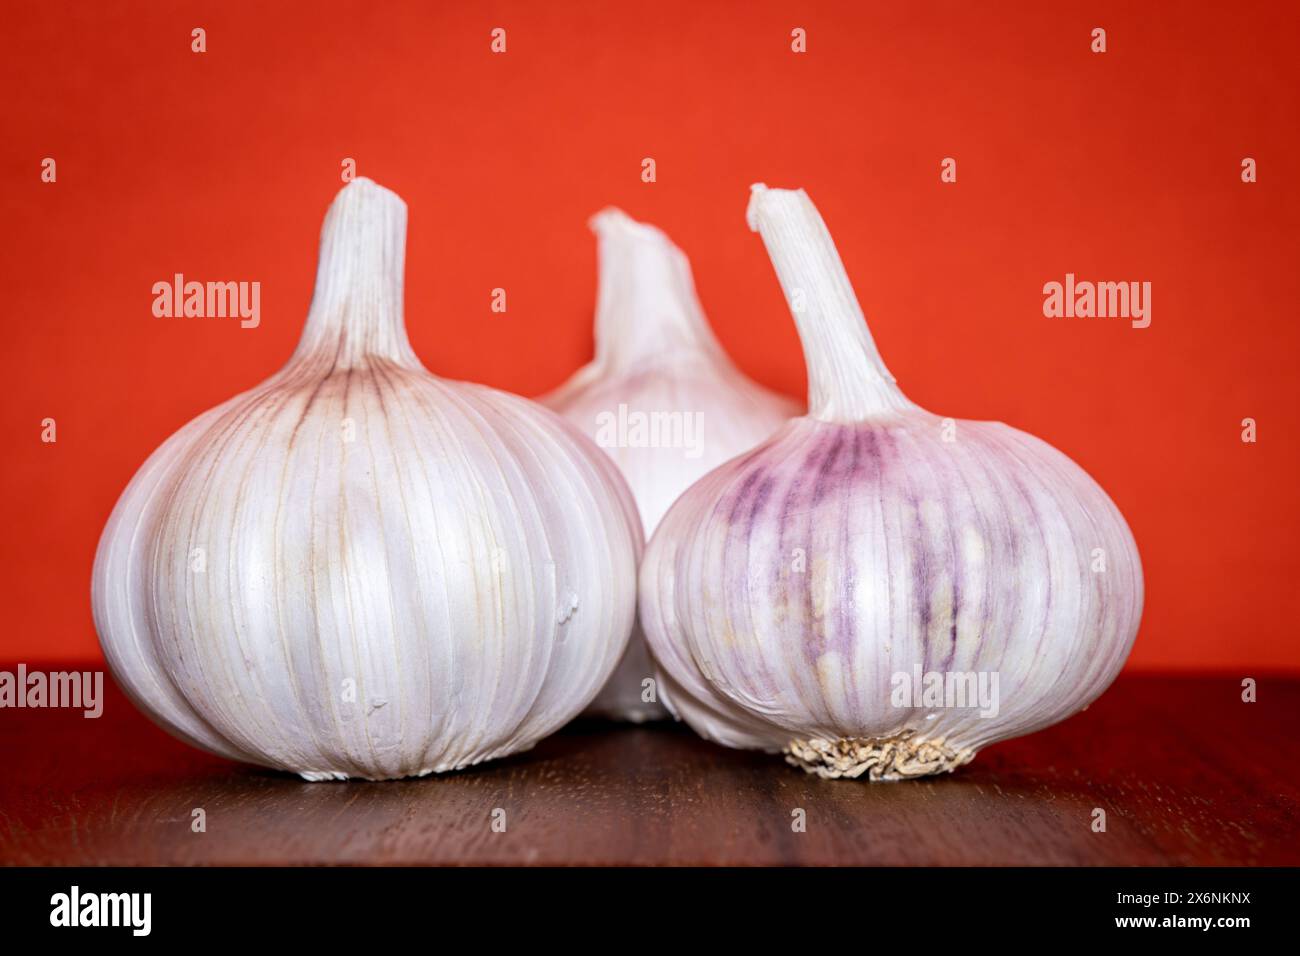 Garlic clove Asian food aroma seasoning ingredient and good for health. Stock Photo